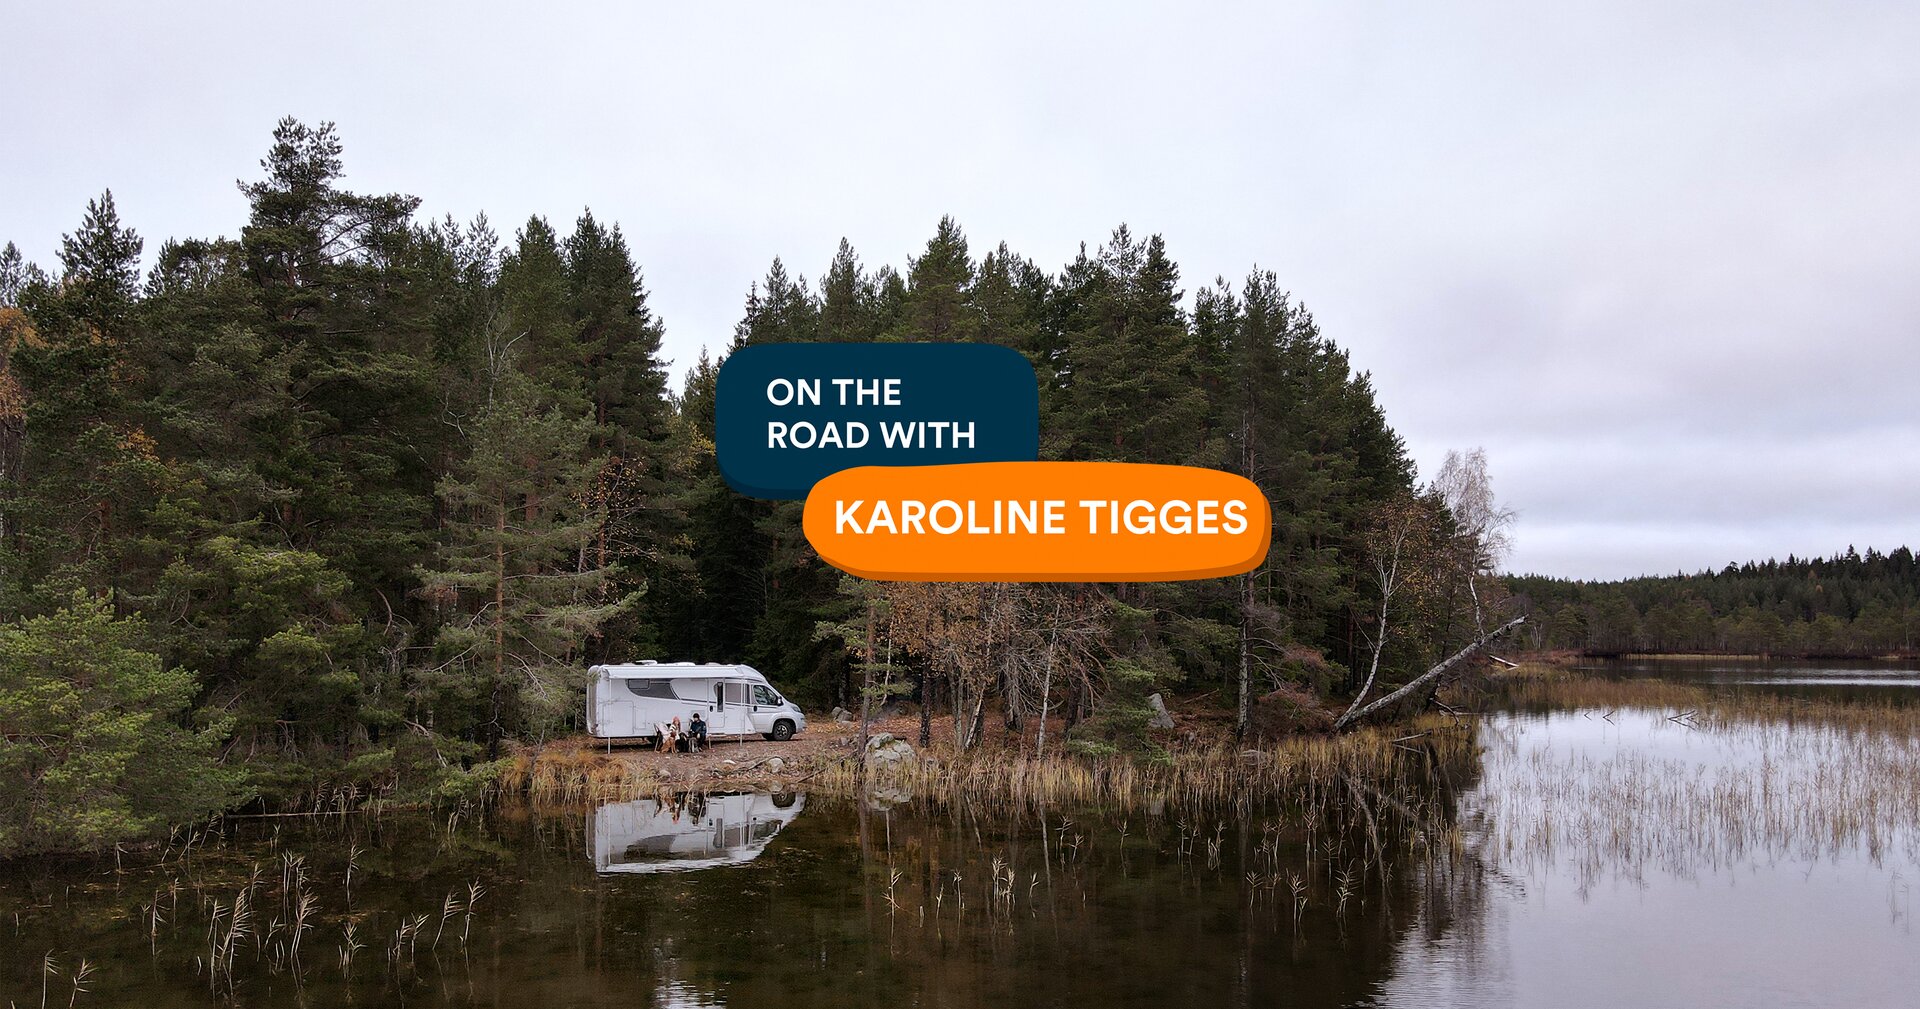 Karo Tigges ist mit dem Carado T447 Reisemobil unterwegs zum Nordkap